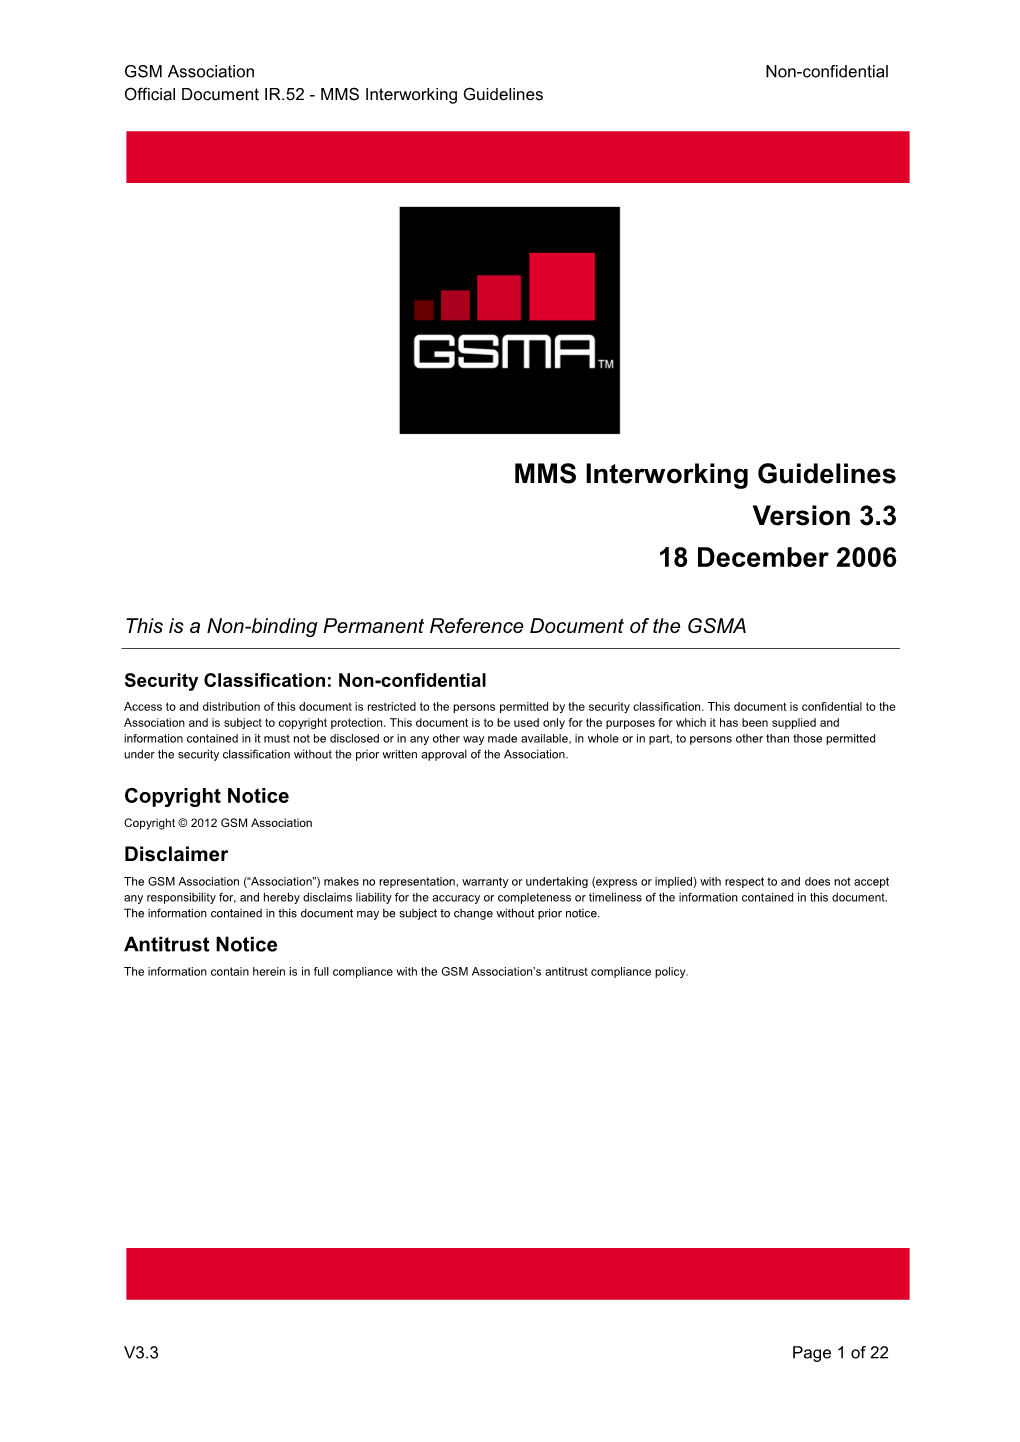 MMS Interworking Guidelines Version 3.3 18 December 2006